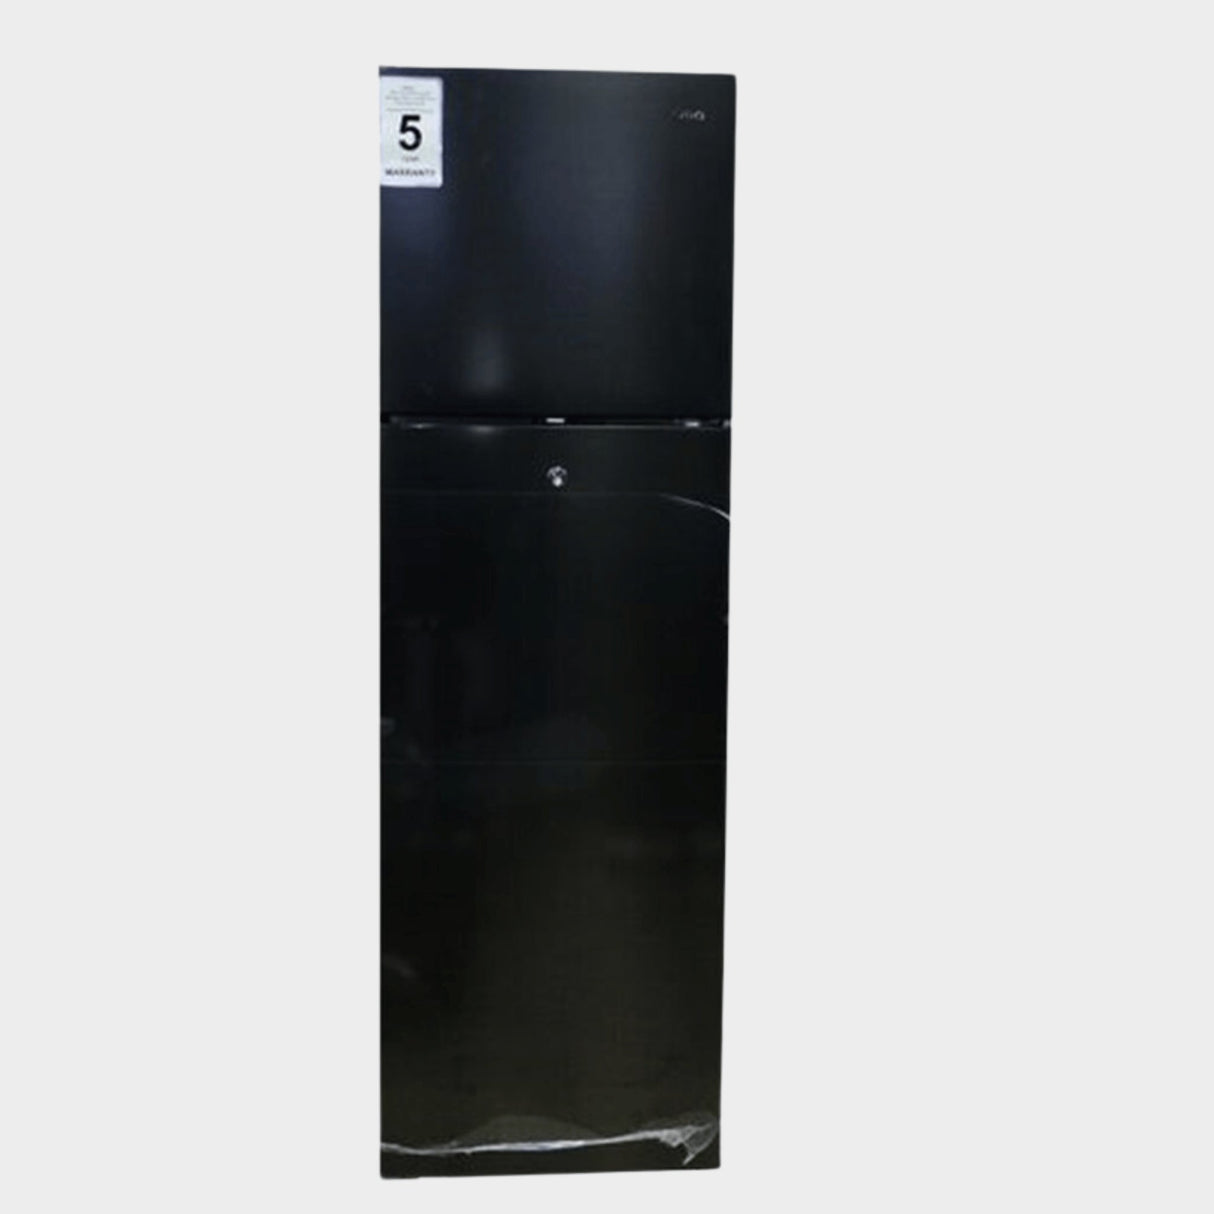 Chiq 168Ltr Double Door Refrigerator Fridge CTM220 – Black - KWT Tech Mart